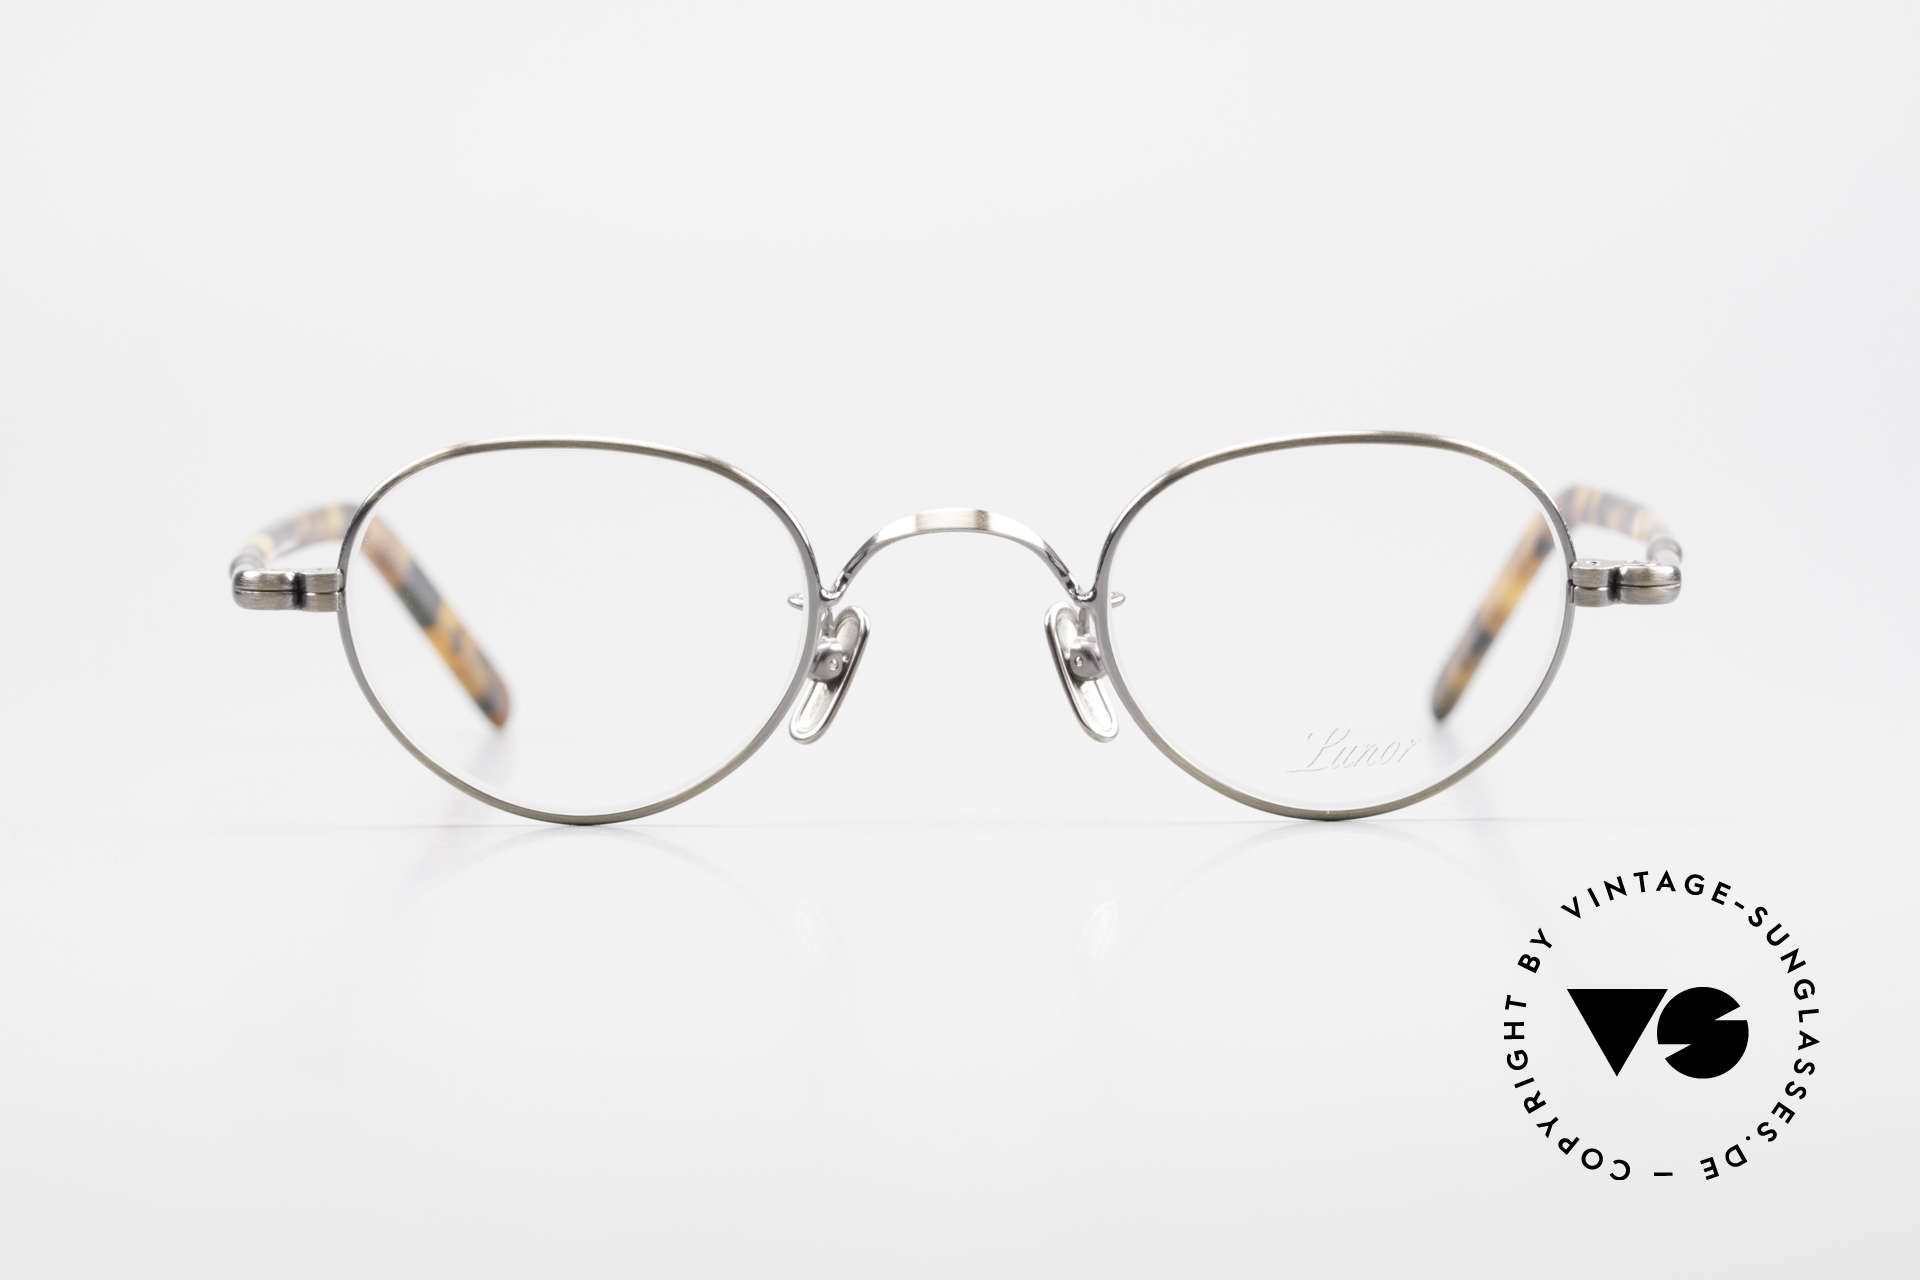 Lunor VA 103 Lunor Eyeglasses Old Original, LUNOR: honest craftsmanship with attention to details, Made for Men and Women